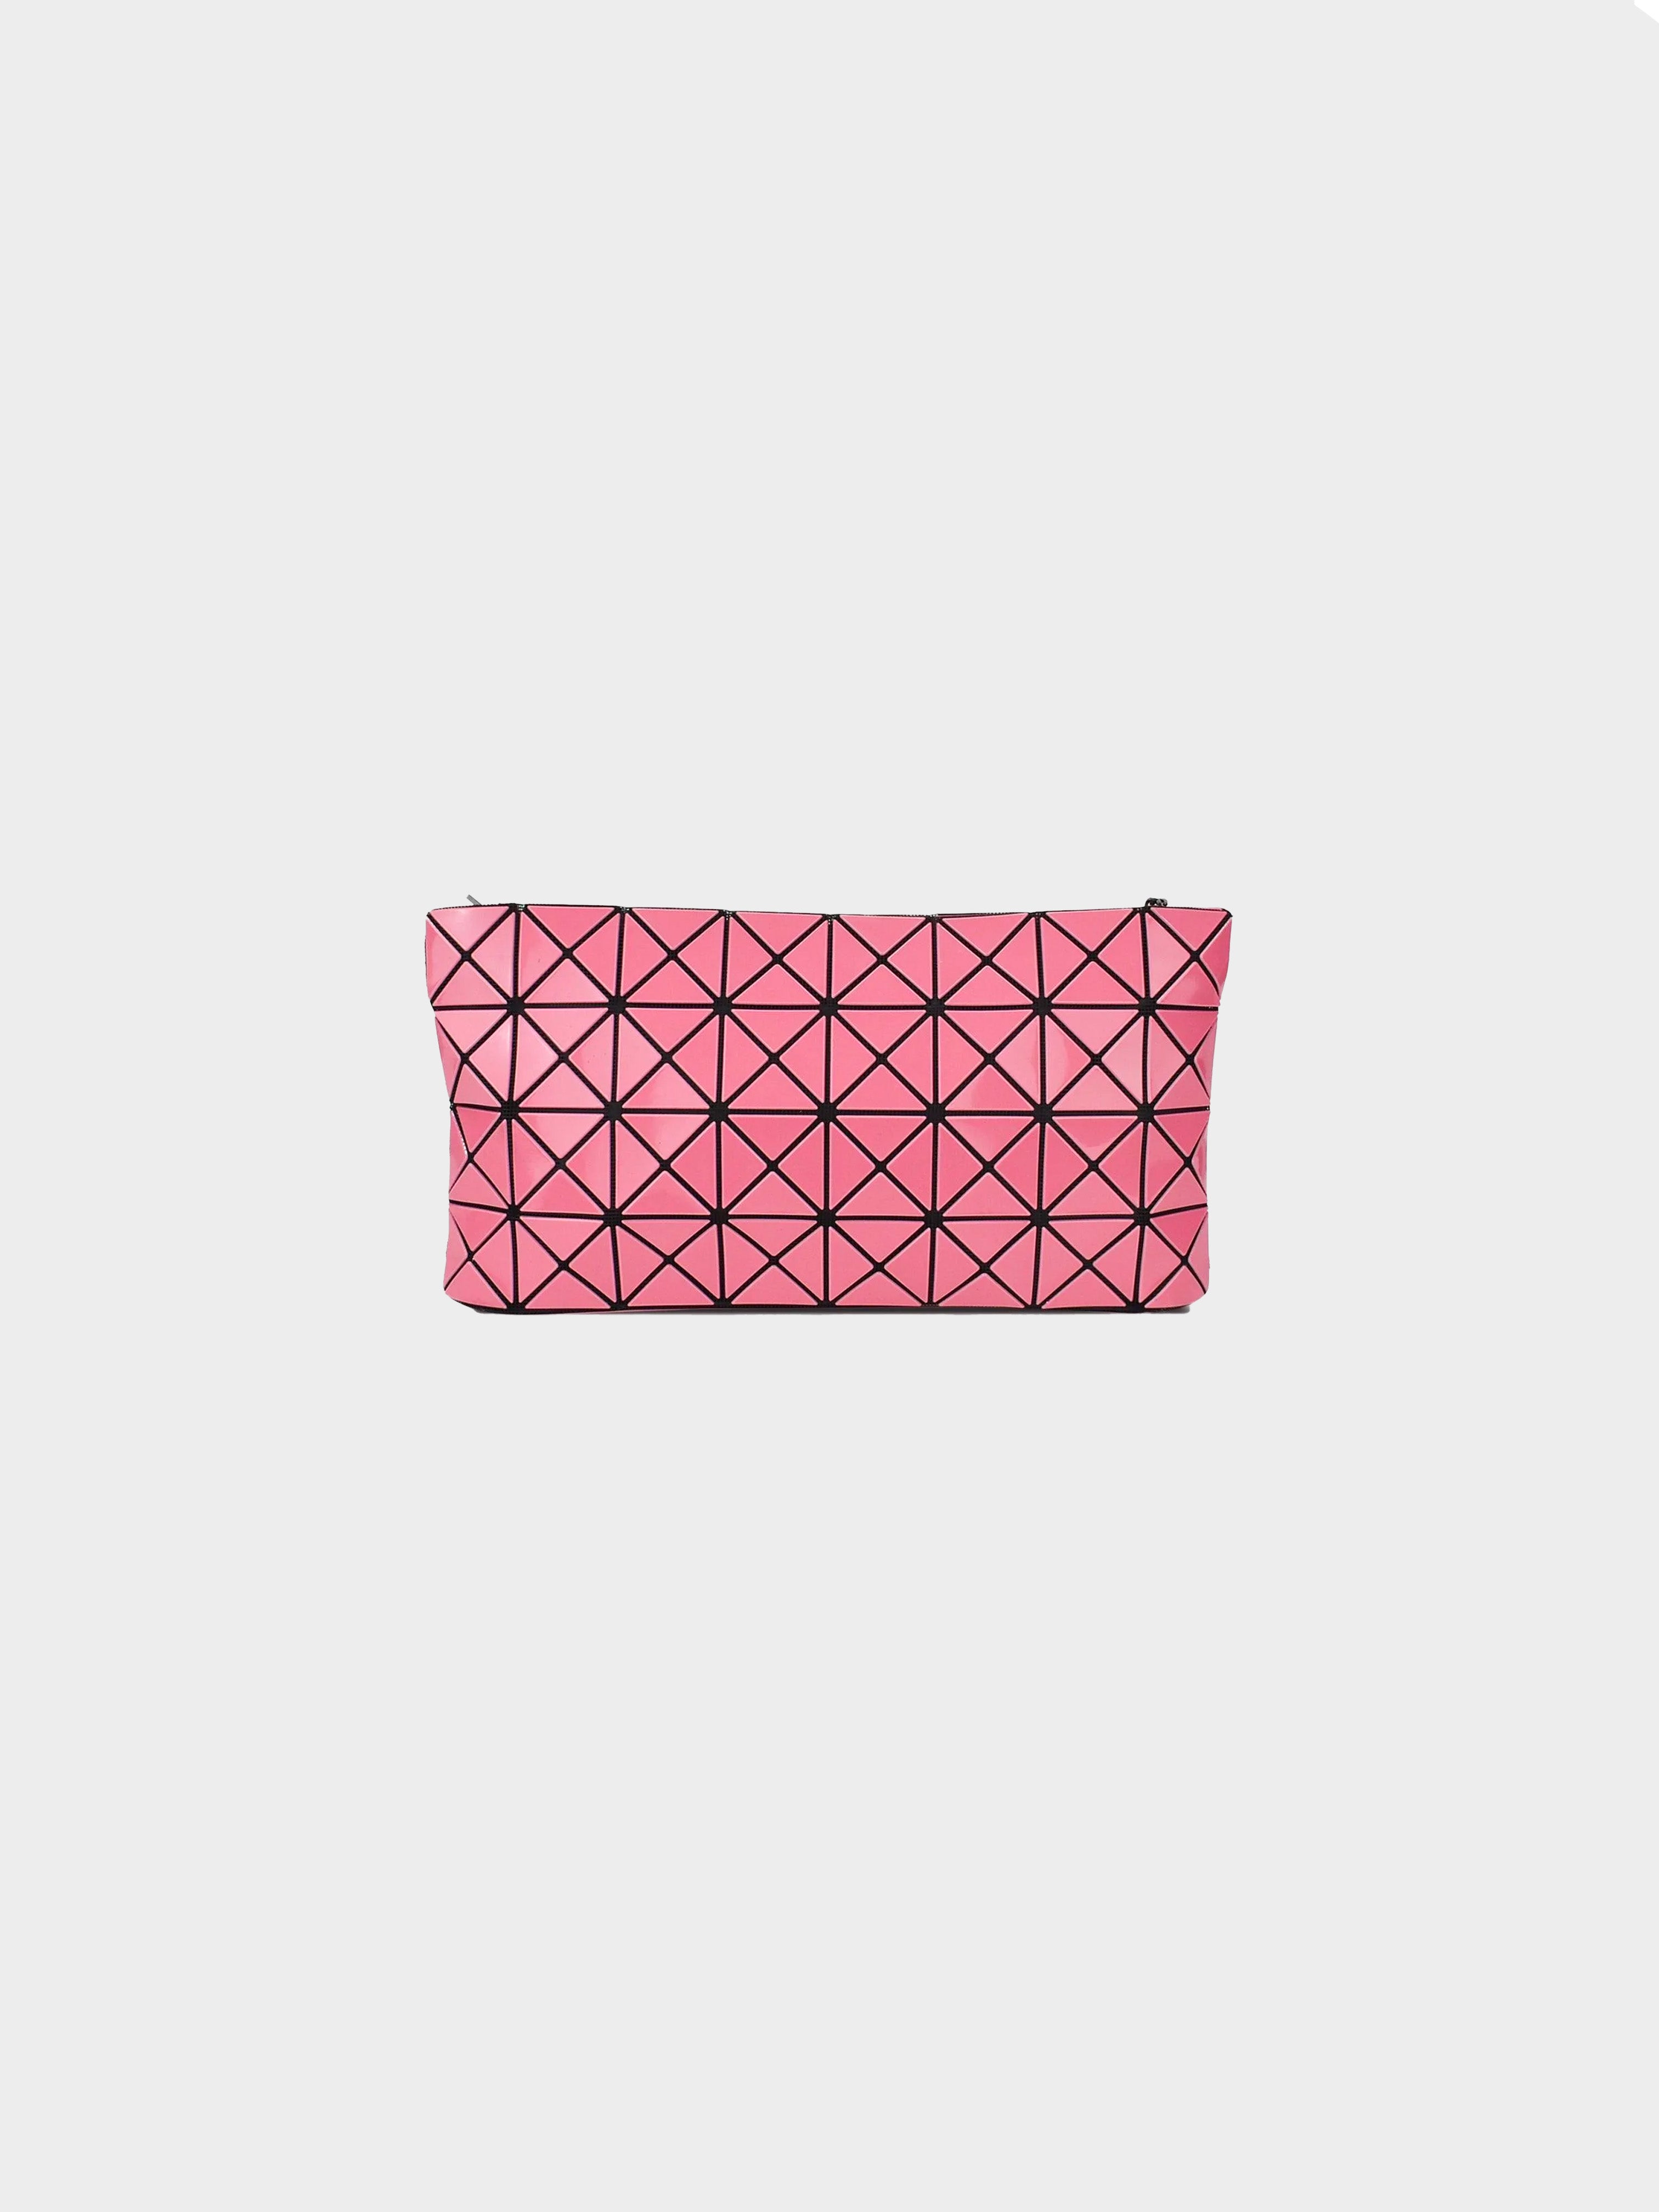 Issey Miyake 2010s Pink Geometric Bao Bao Bag